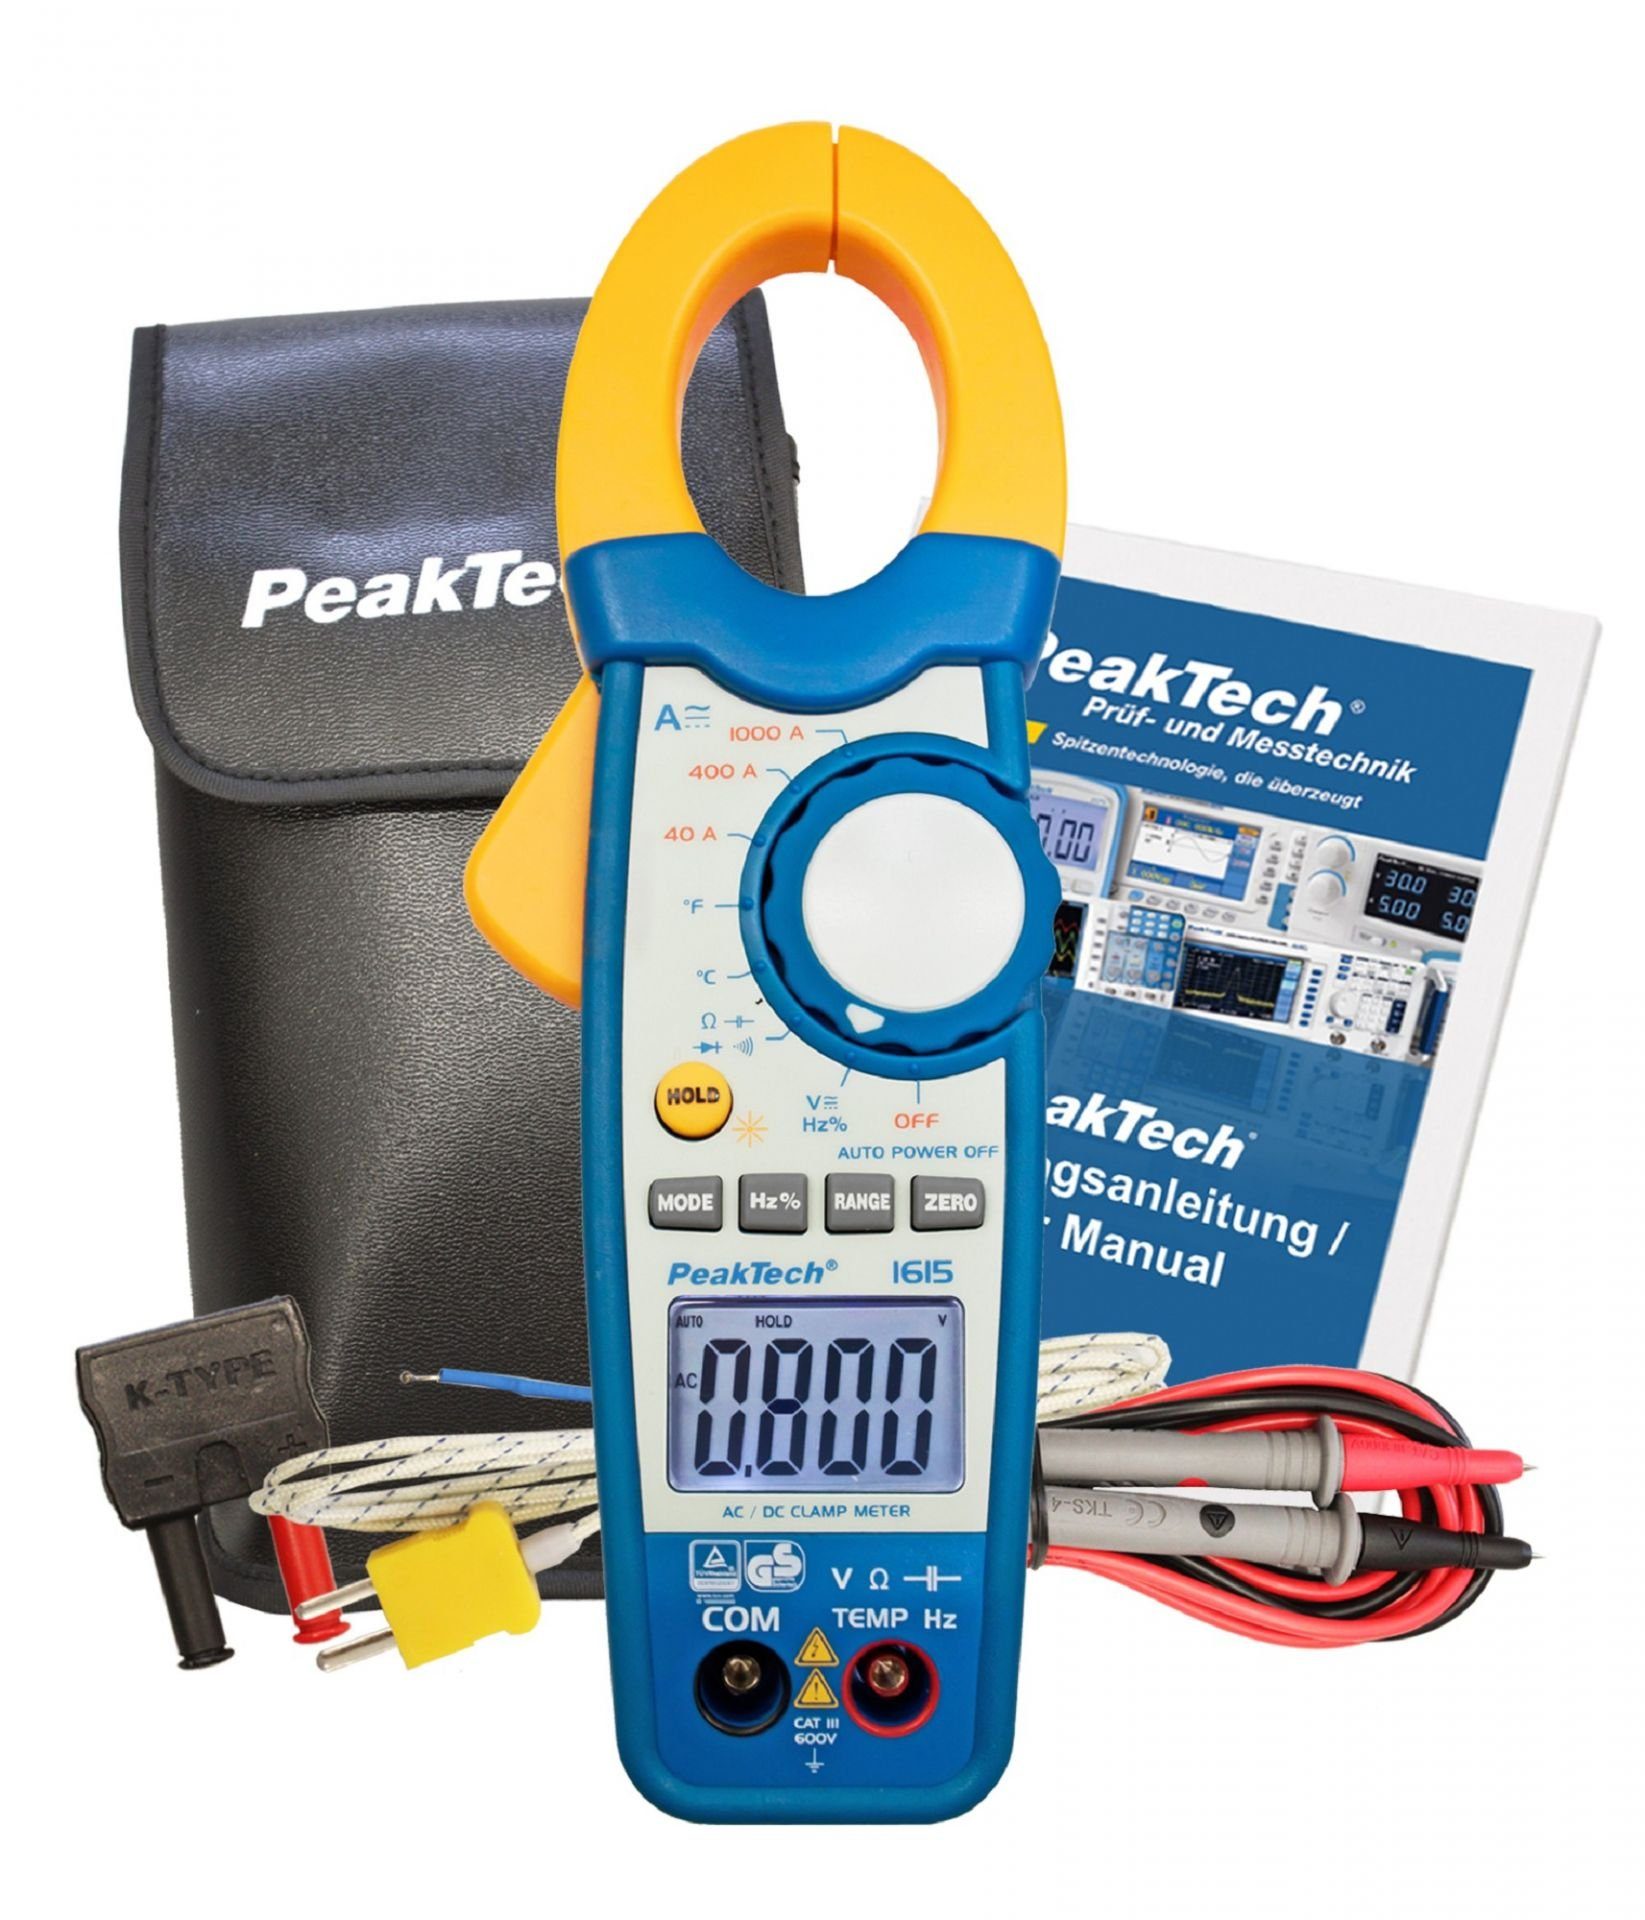 PeakTech Strommessgerät PeakTech 1625: mit Digitalmultimeter, Stromzangenamperemeter & 1-tlg. TrueRMS